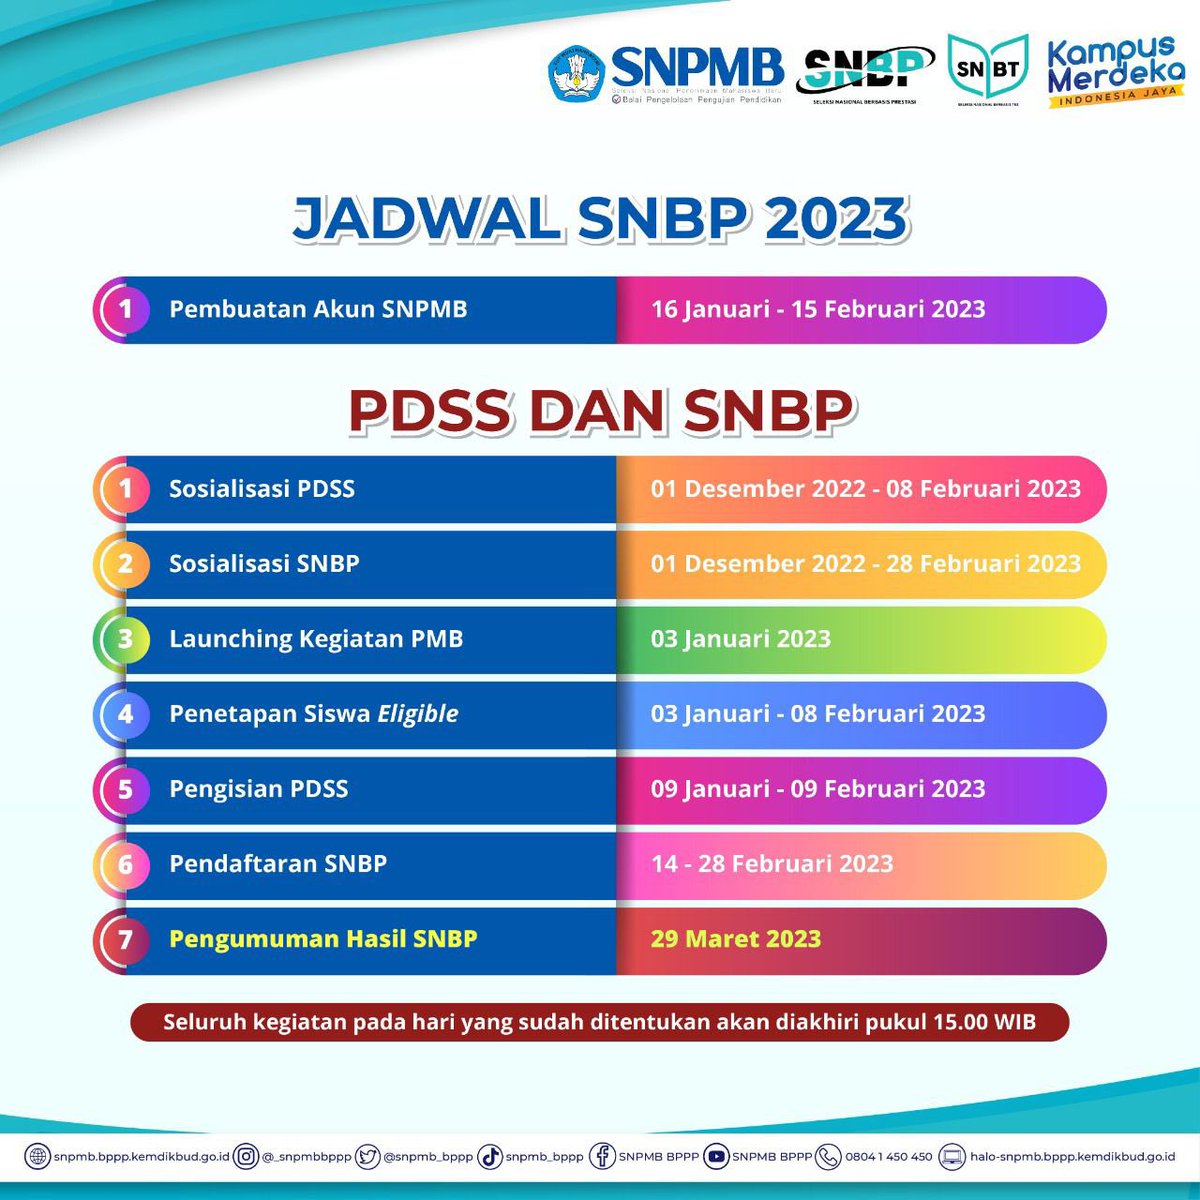 ❗JADWAL SNBP & PDSS 2023❗ Halo, Calon Mahasiswa Indonesia! SNBP & PDSS 2023 sudah di depan mata. Mari persiapkan diri untuk mengikuti seluruh tahapan registrasi. Untuk itu, mari kita simak bersama jadwal terkini untuk tahap PDSS & SNBP 2023 berikut.